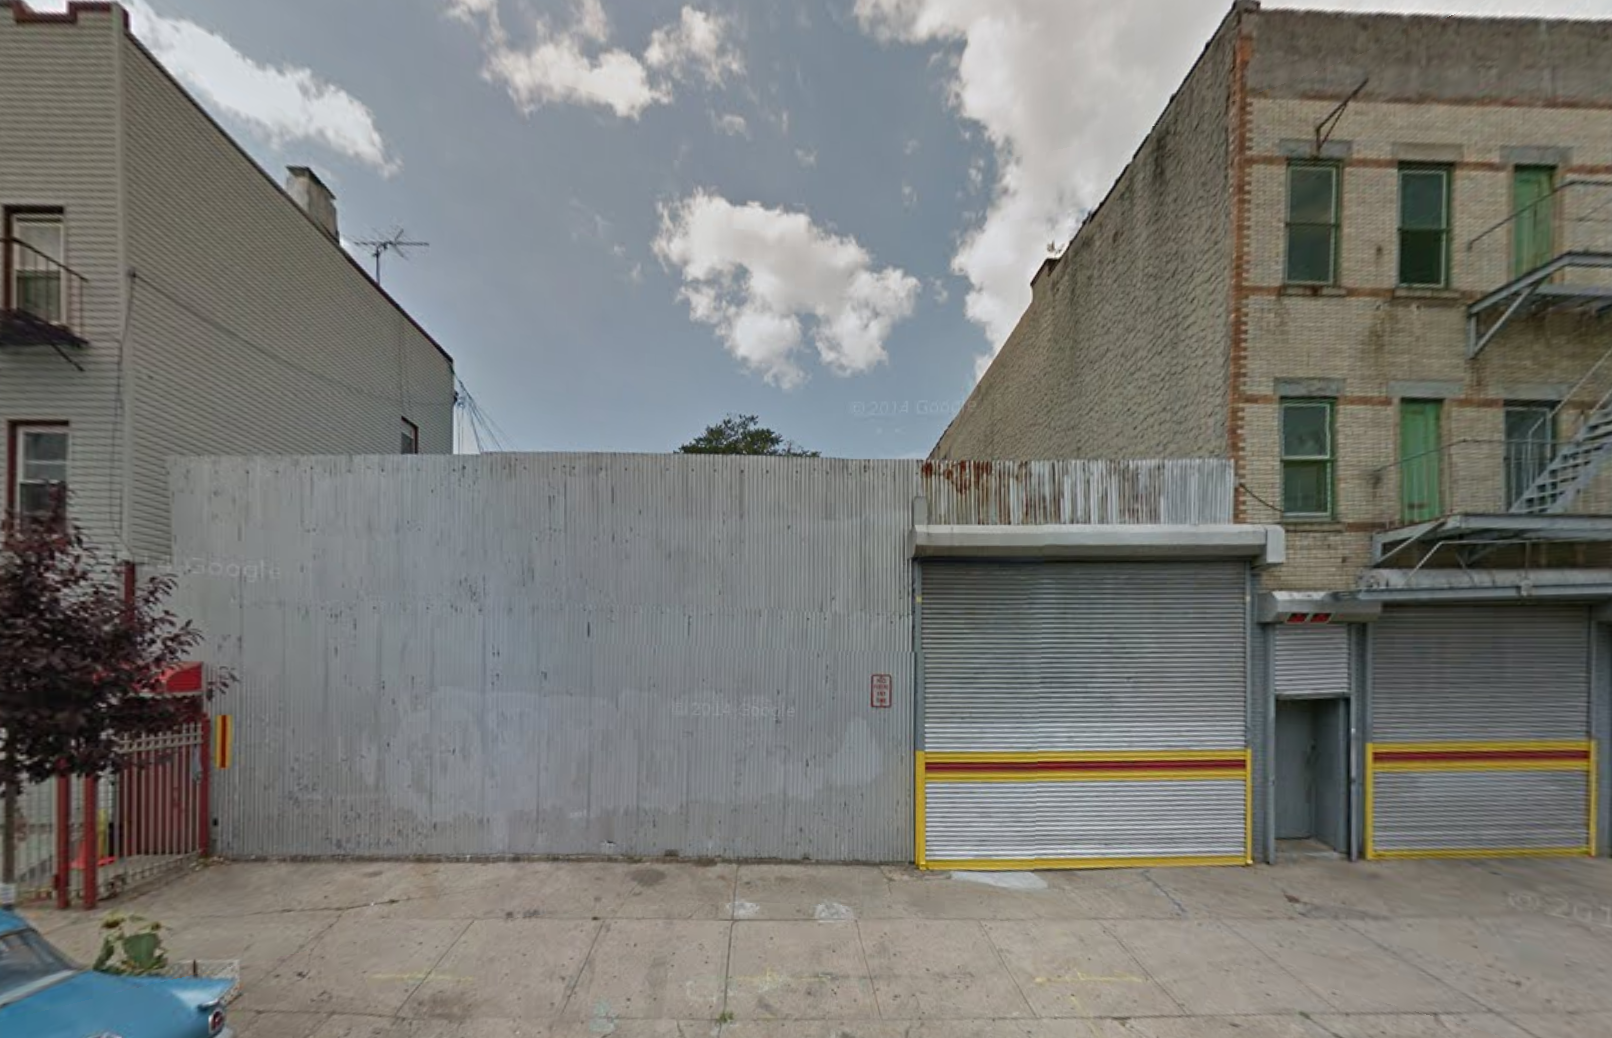 703 Hart Street, image via Google Maps